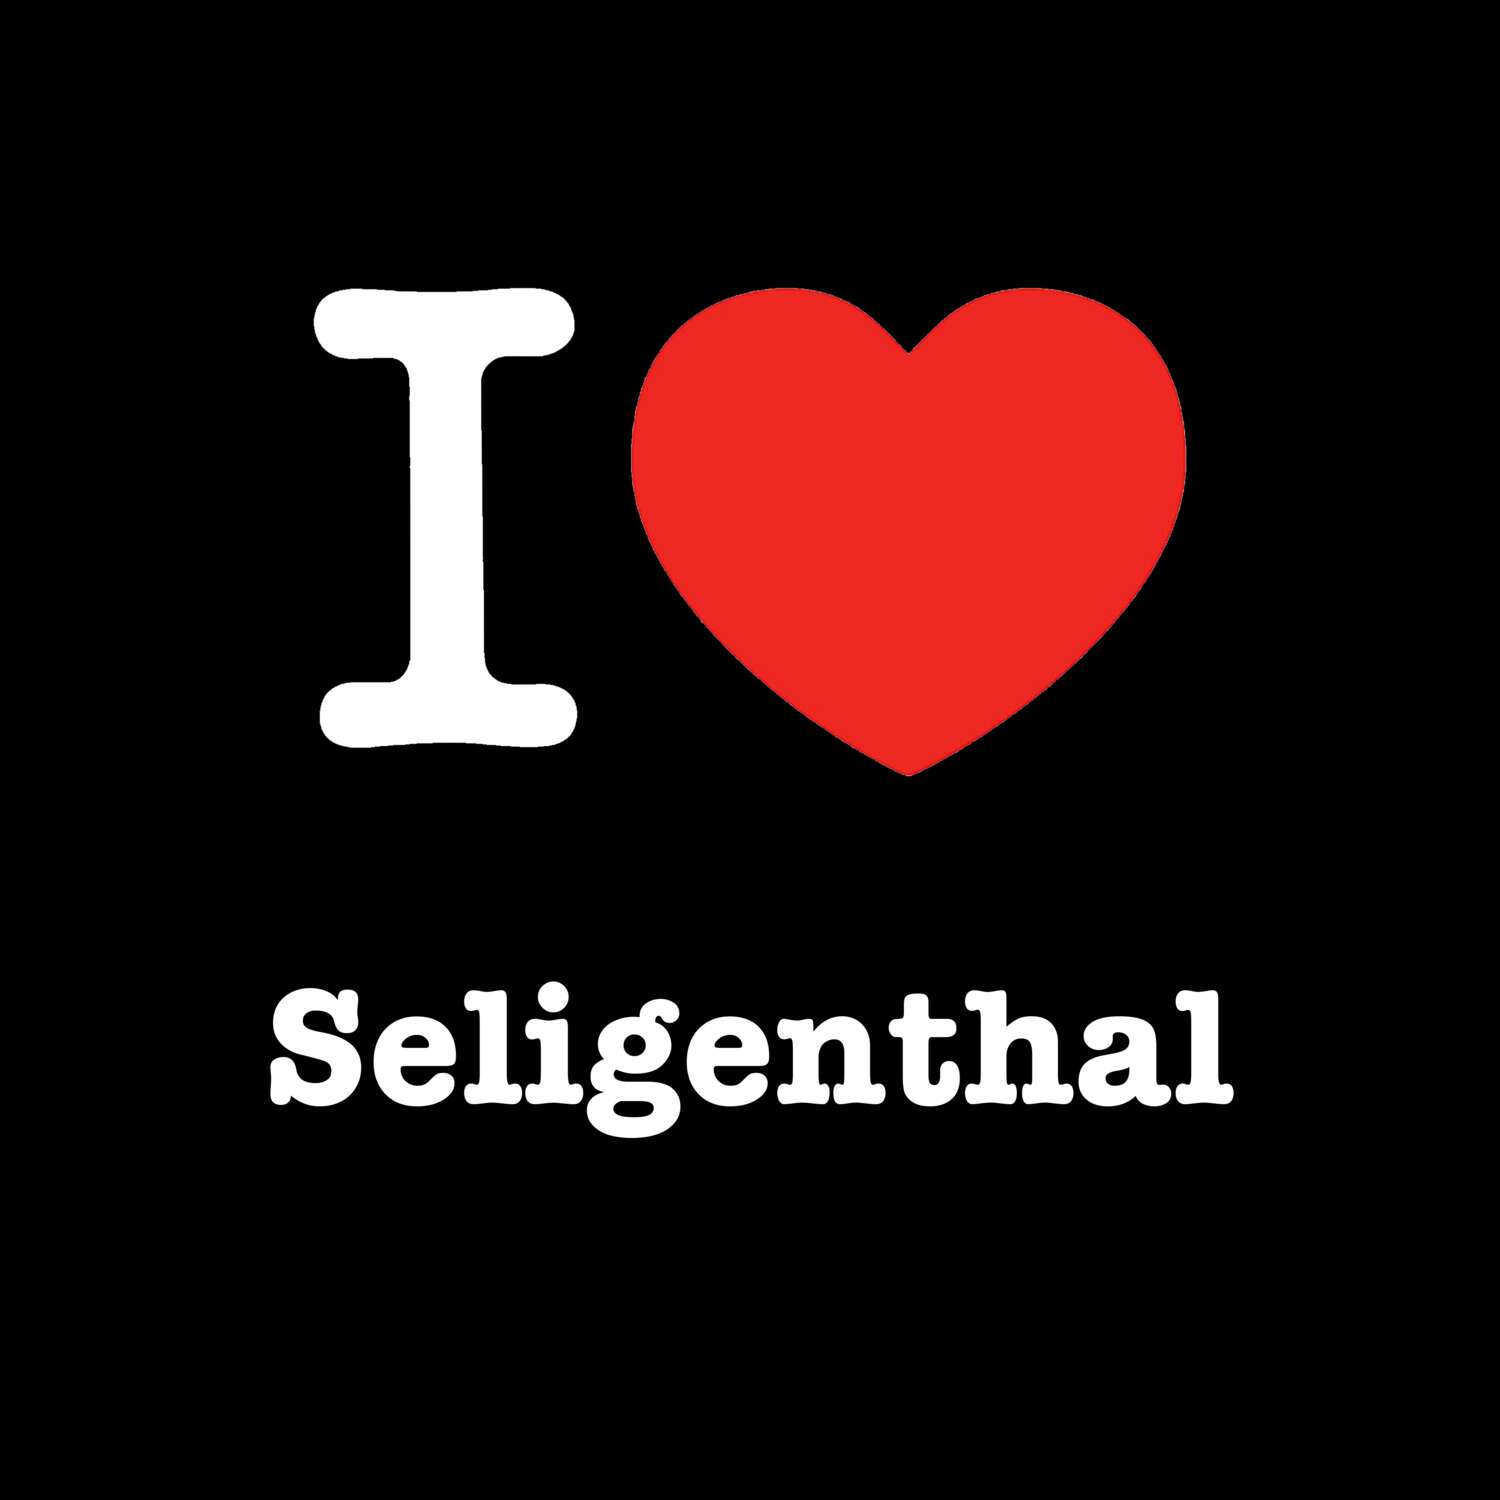 Seligenthal T-Shirt »I love«